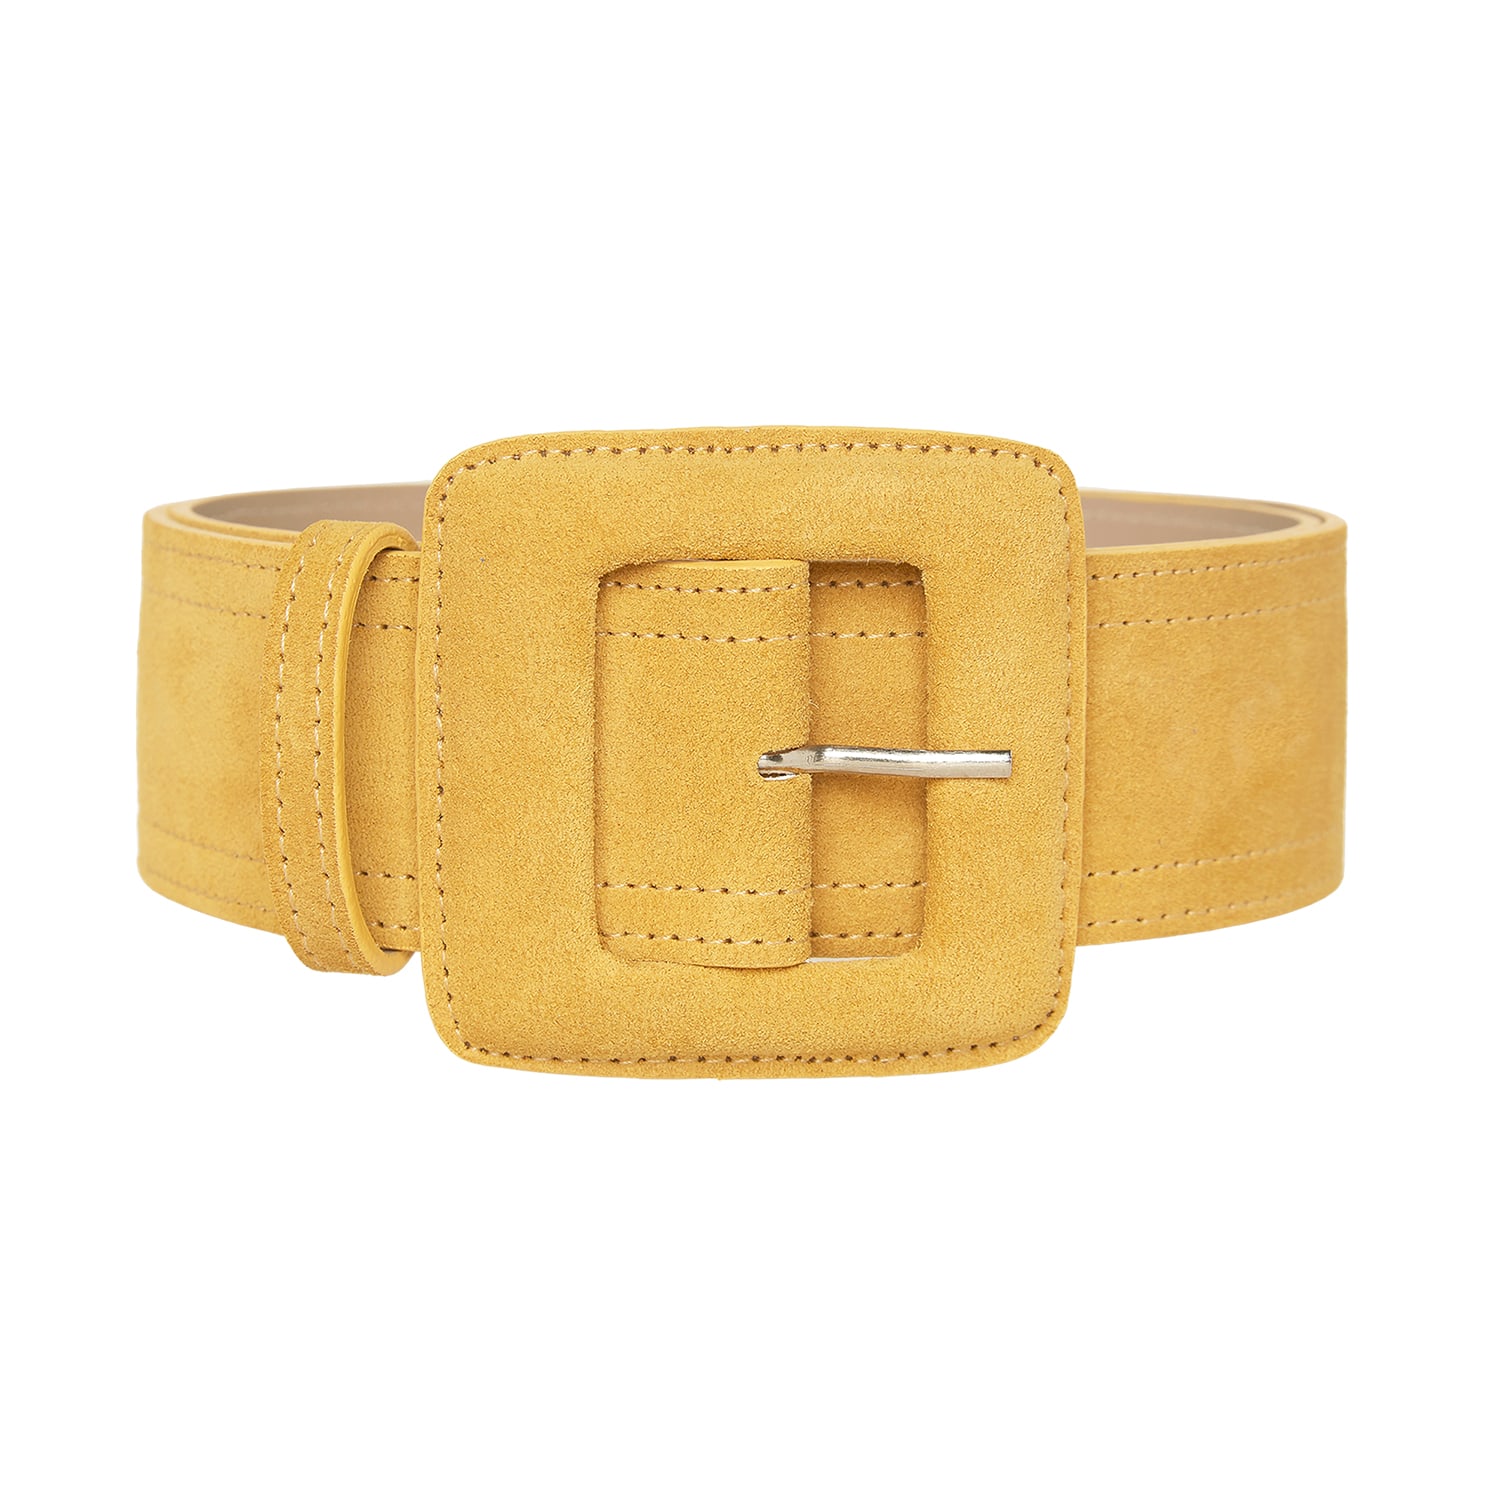 Beltbe Women's Yellow / Orange Suede Square Buckle Belt - Mustard